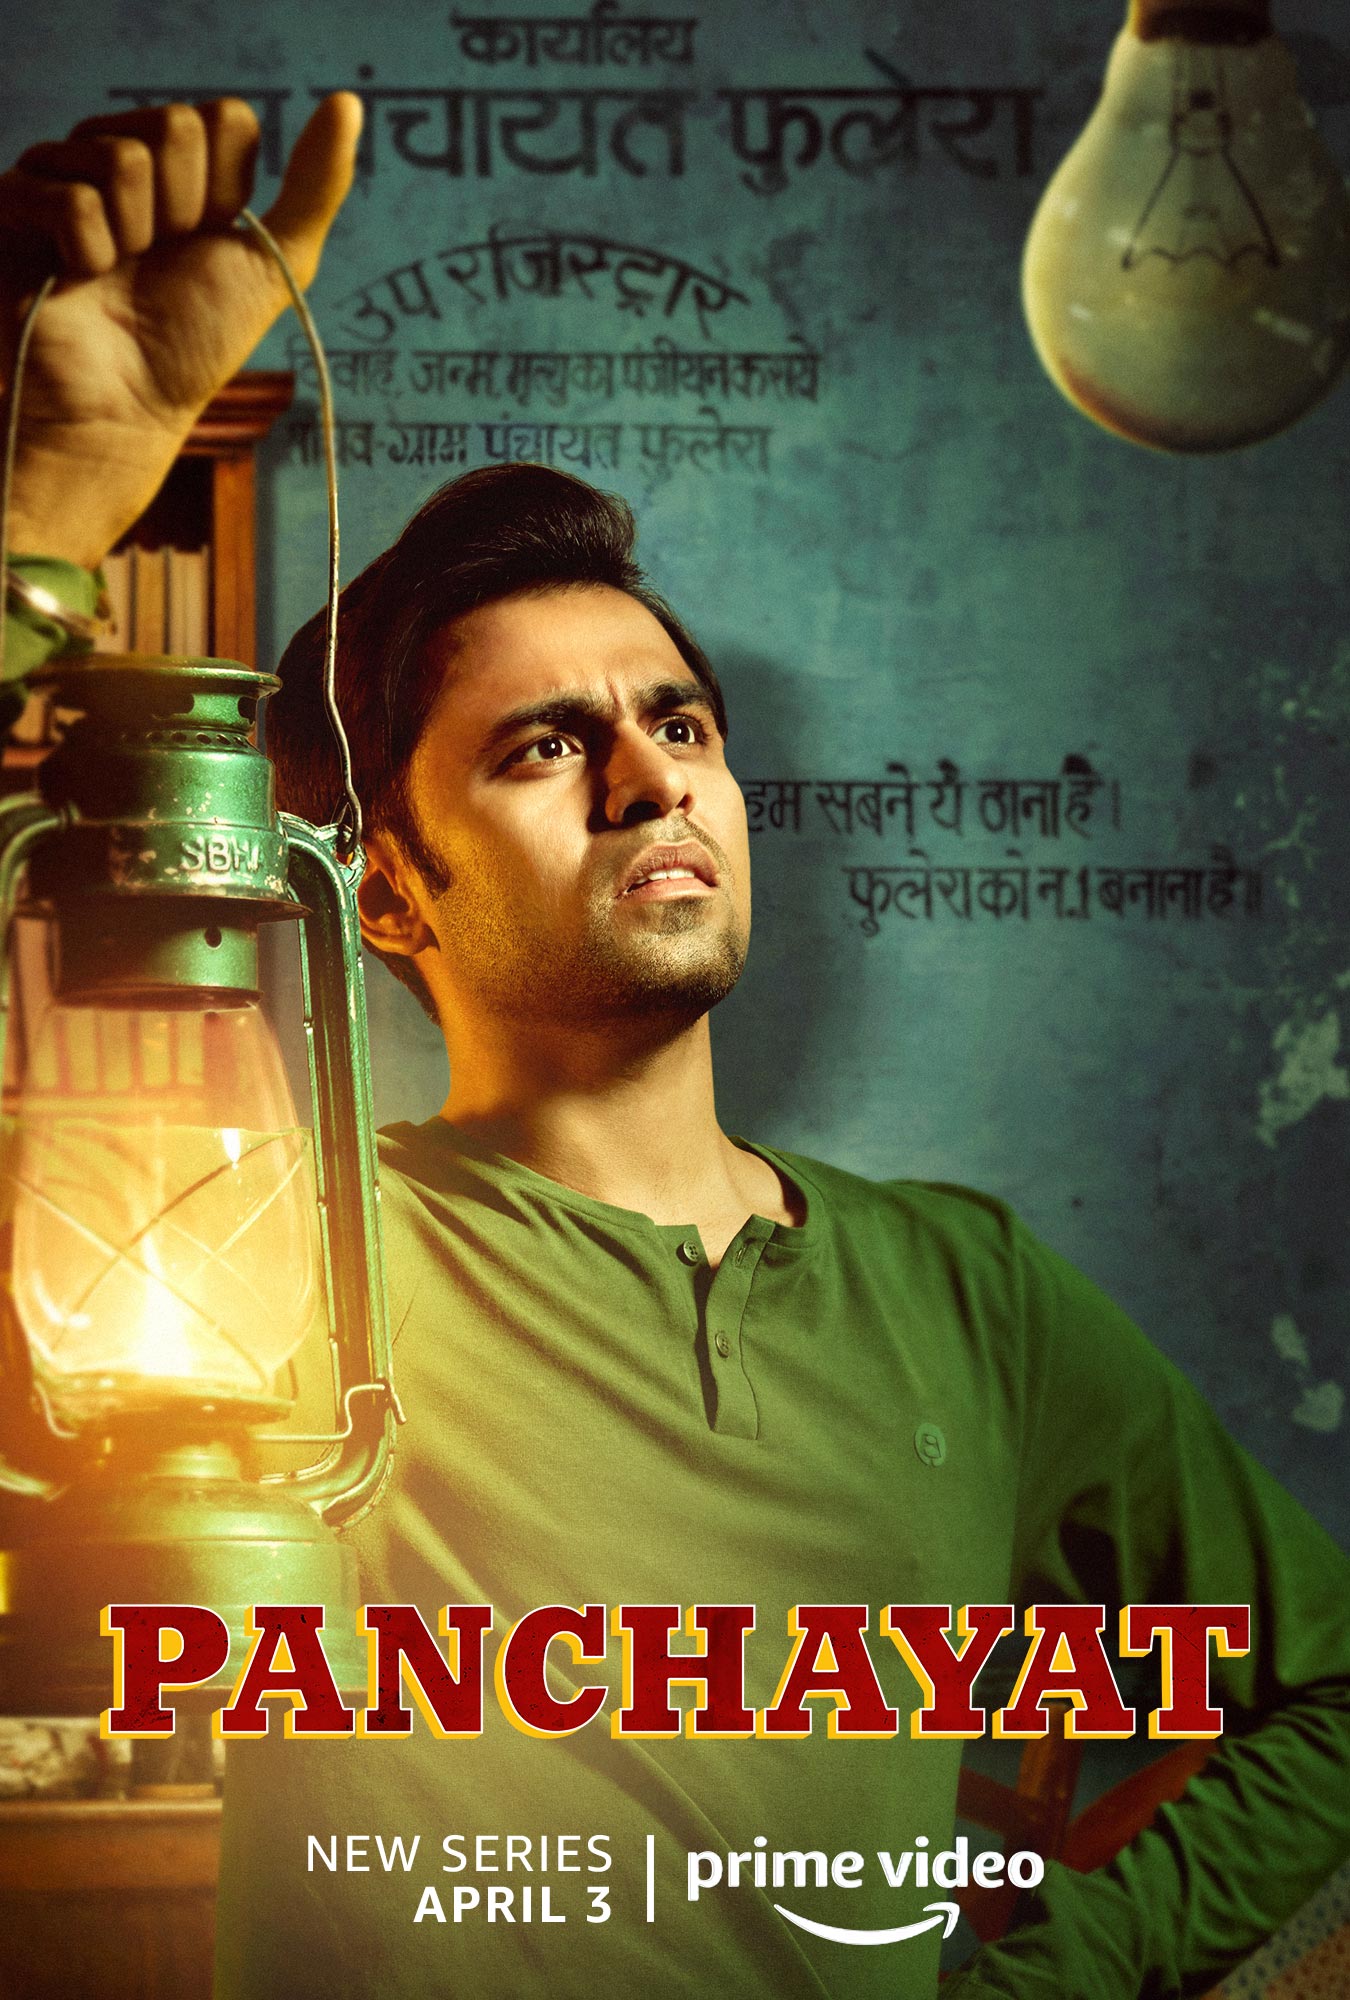 panchayat season 3 release date